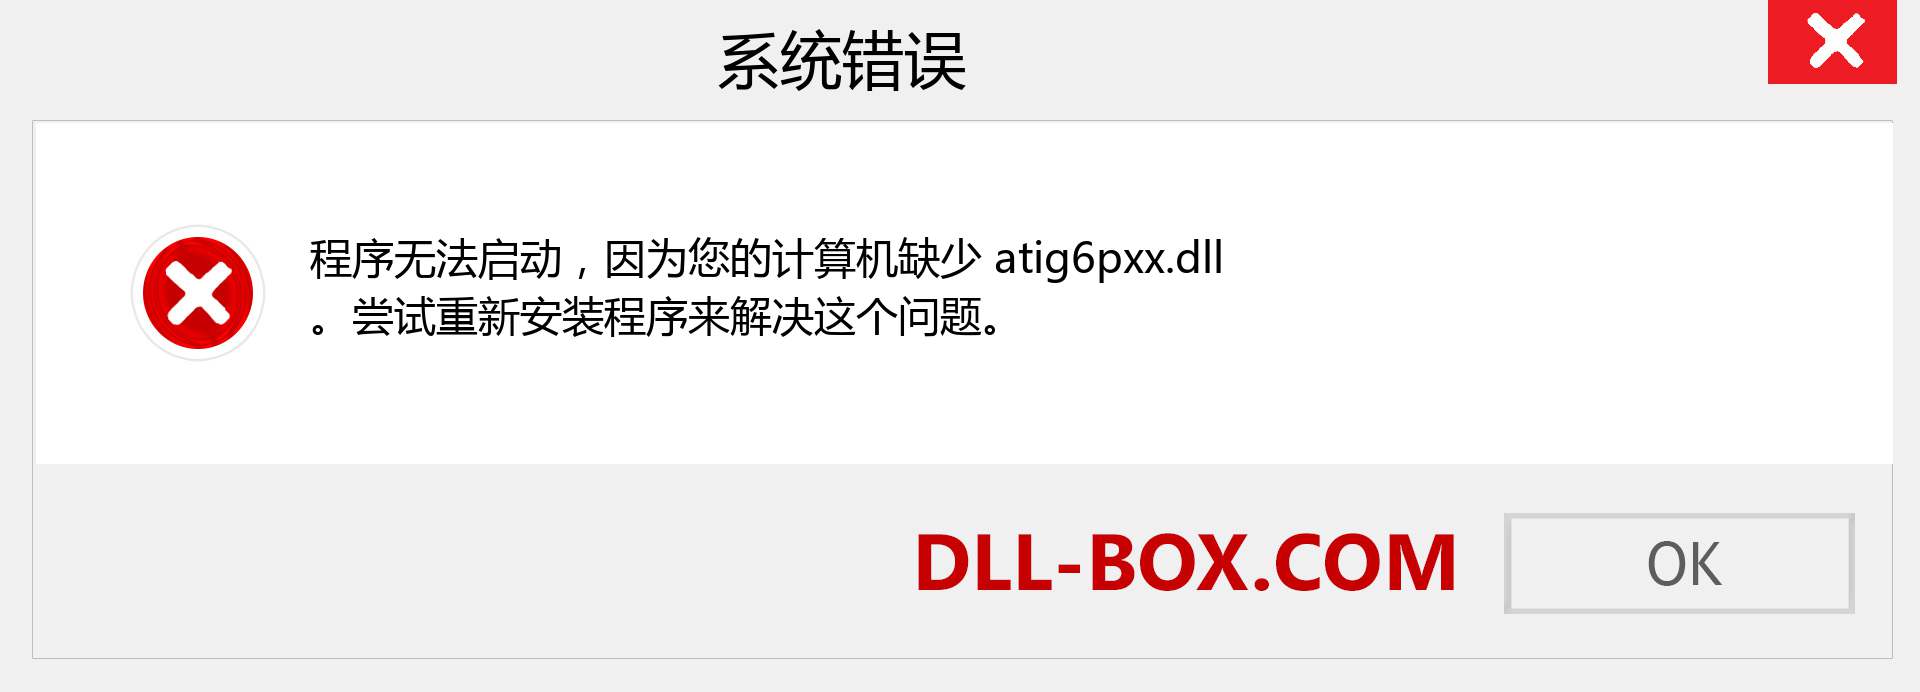 atig6pxx.dll 文件丢失？。 适用于 Windows 7、8、10 的下载 - 修复 Windows、照片、图像上的 atig6pxx dll 丢失错误